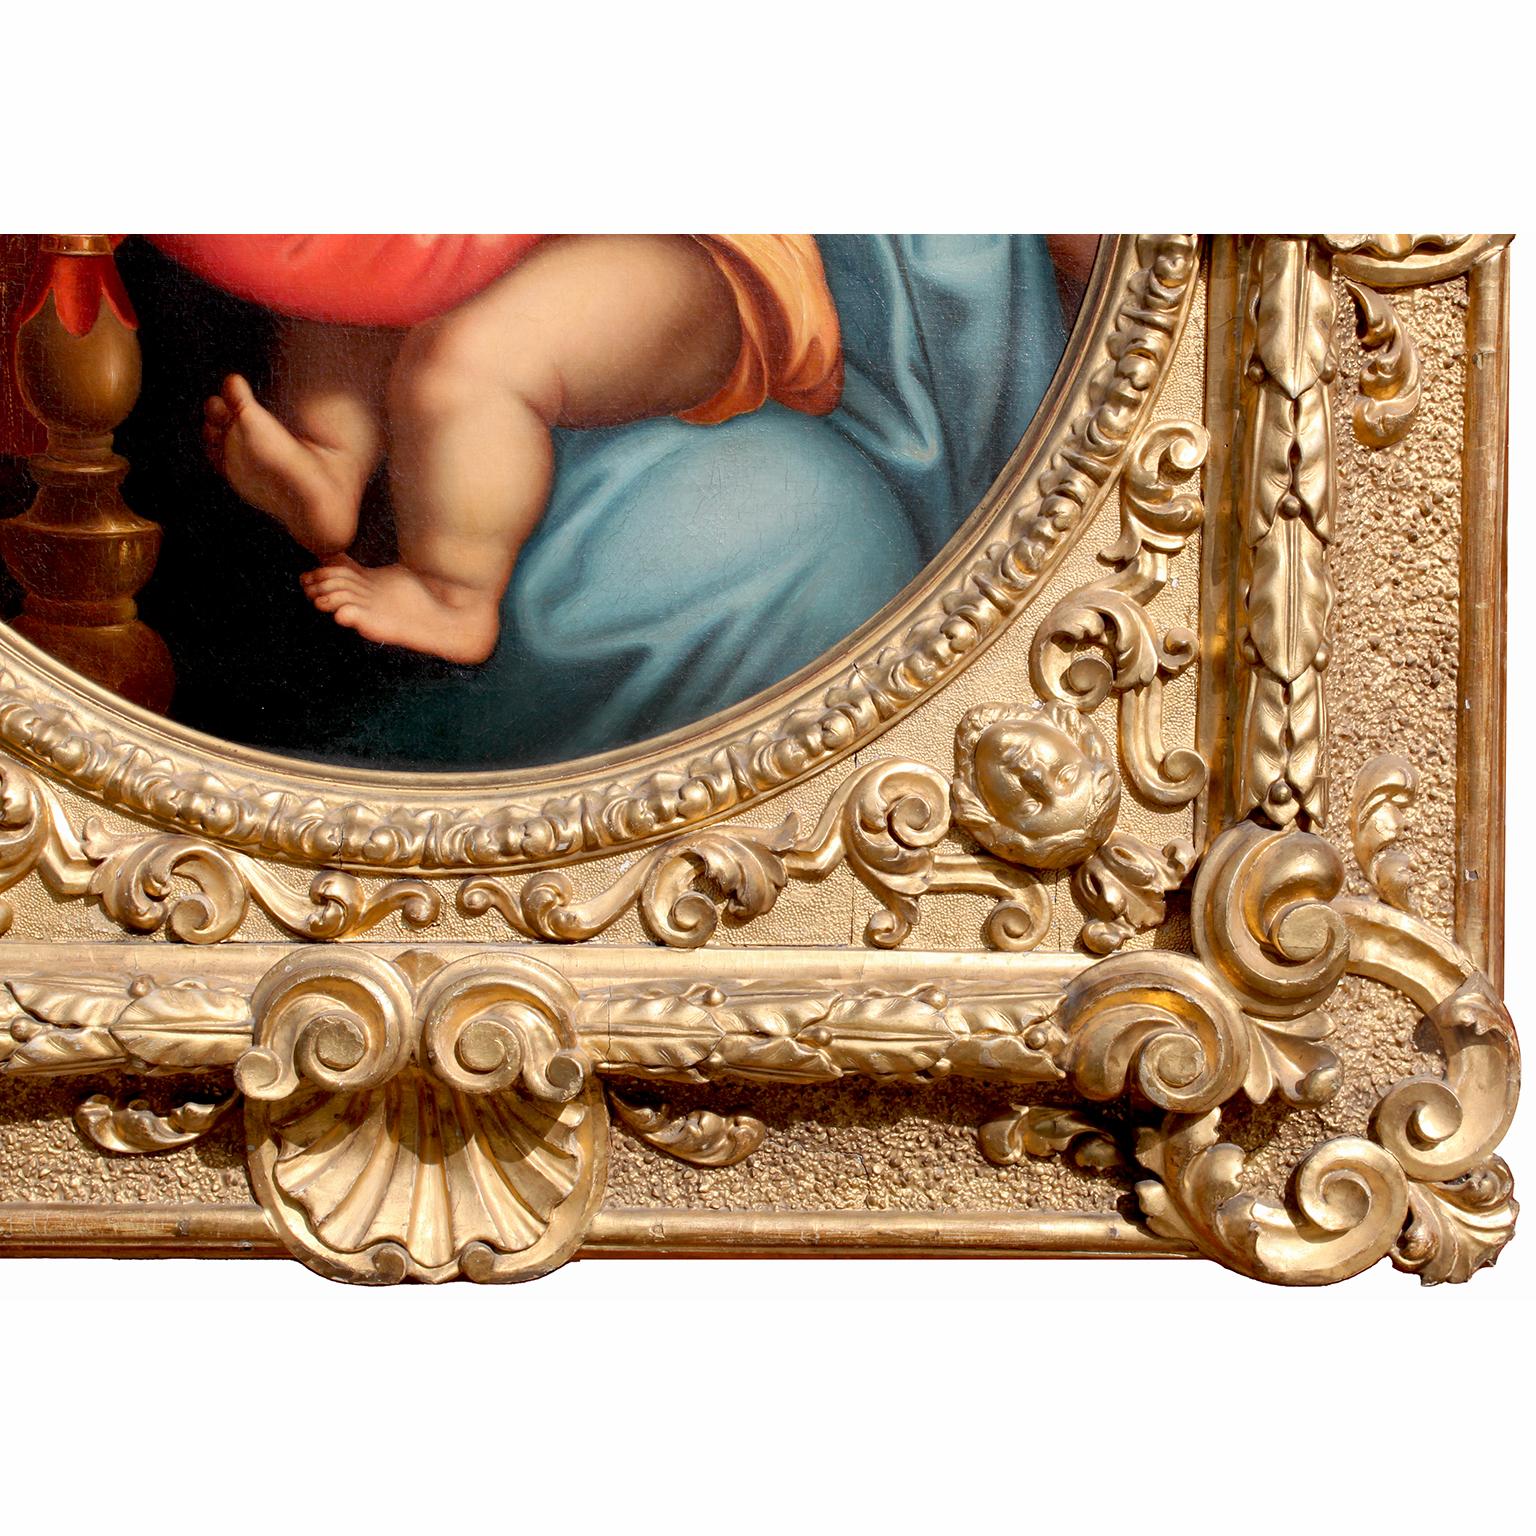 Nach Raffaello Sanzio 1483-1520 Raphael La Madonna della Seggiola, Öl auf Leinwand im Angebot 1